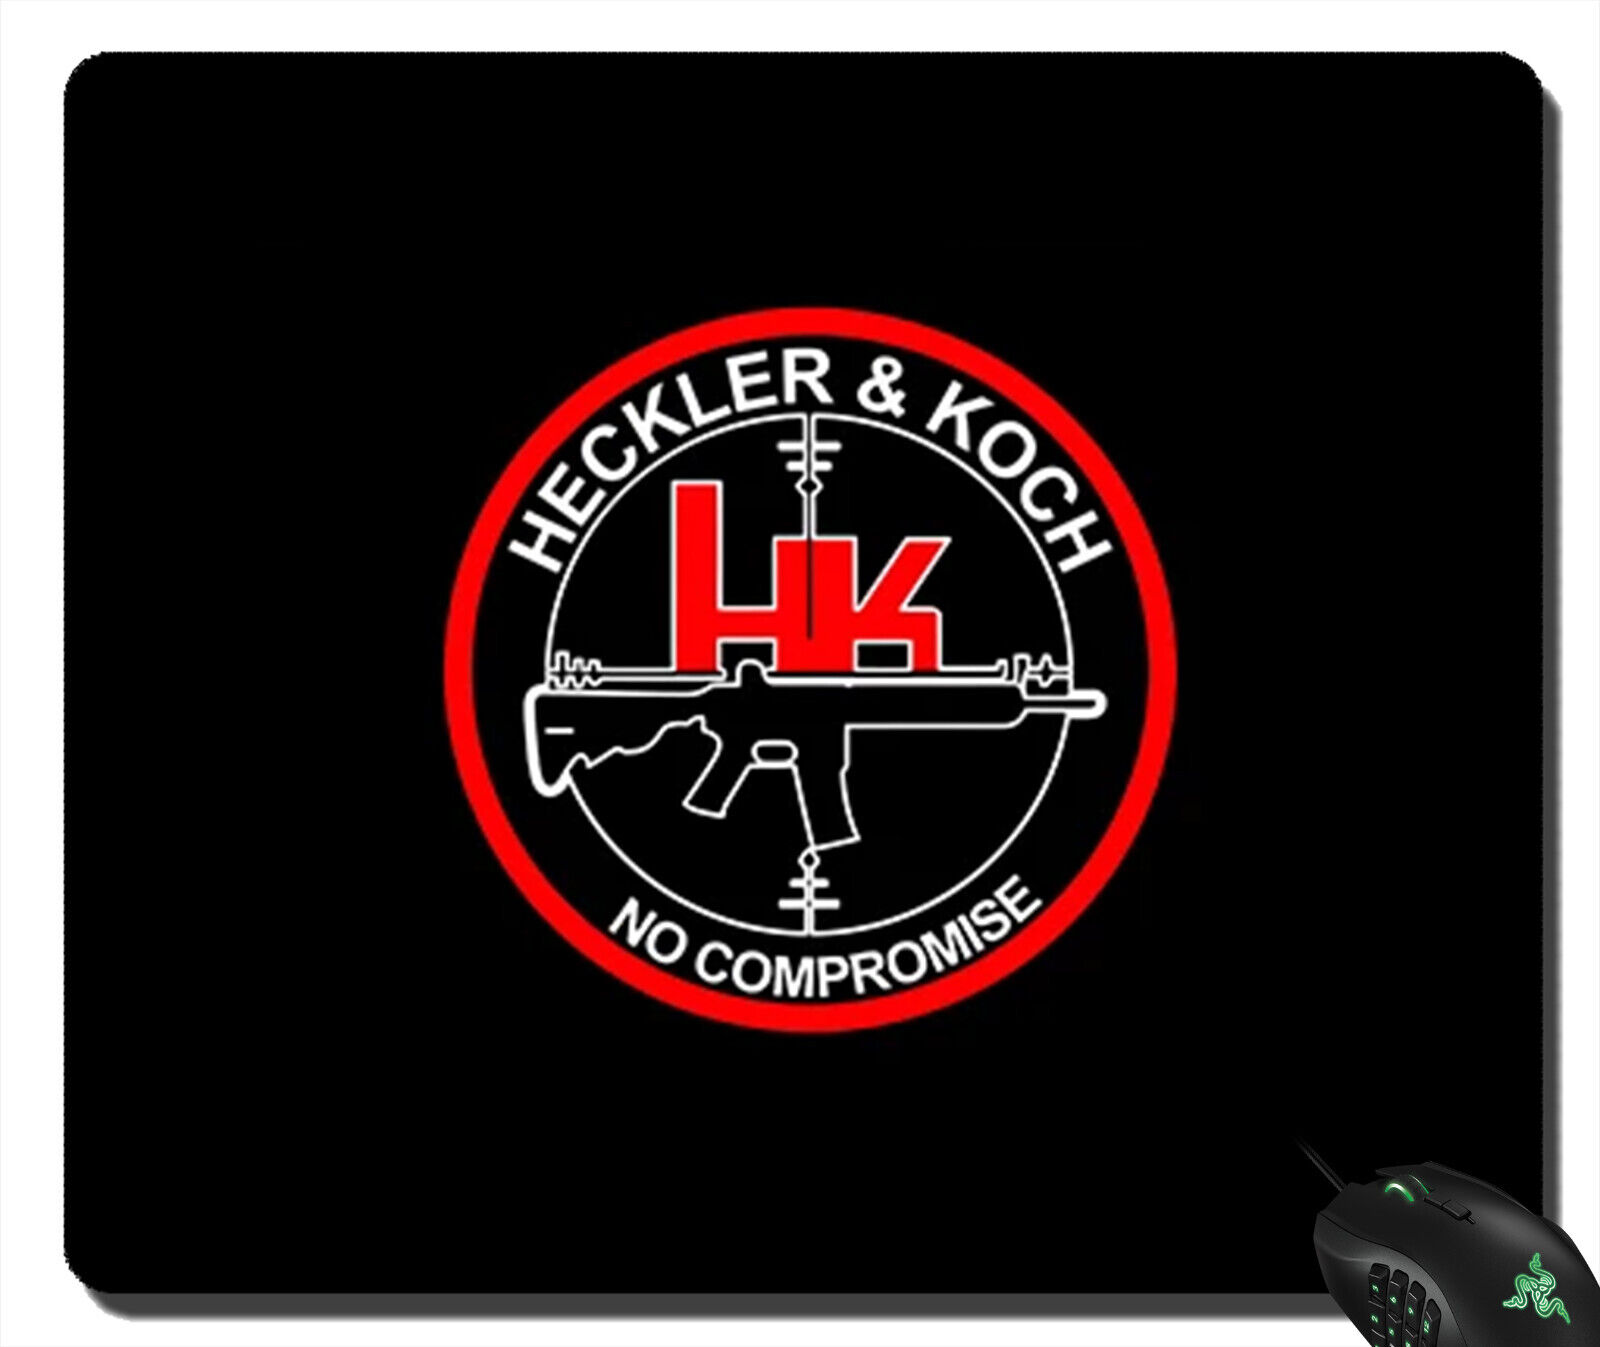 Heckler & Koch HK Guns Firearms 3 mousepad macbook asus acer lenovo samsung